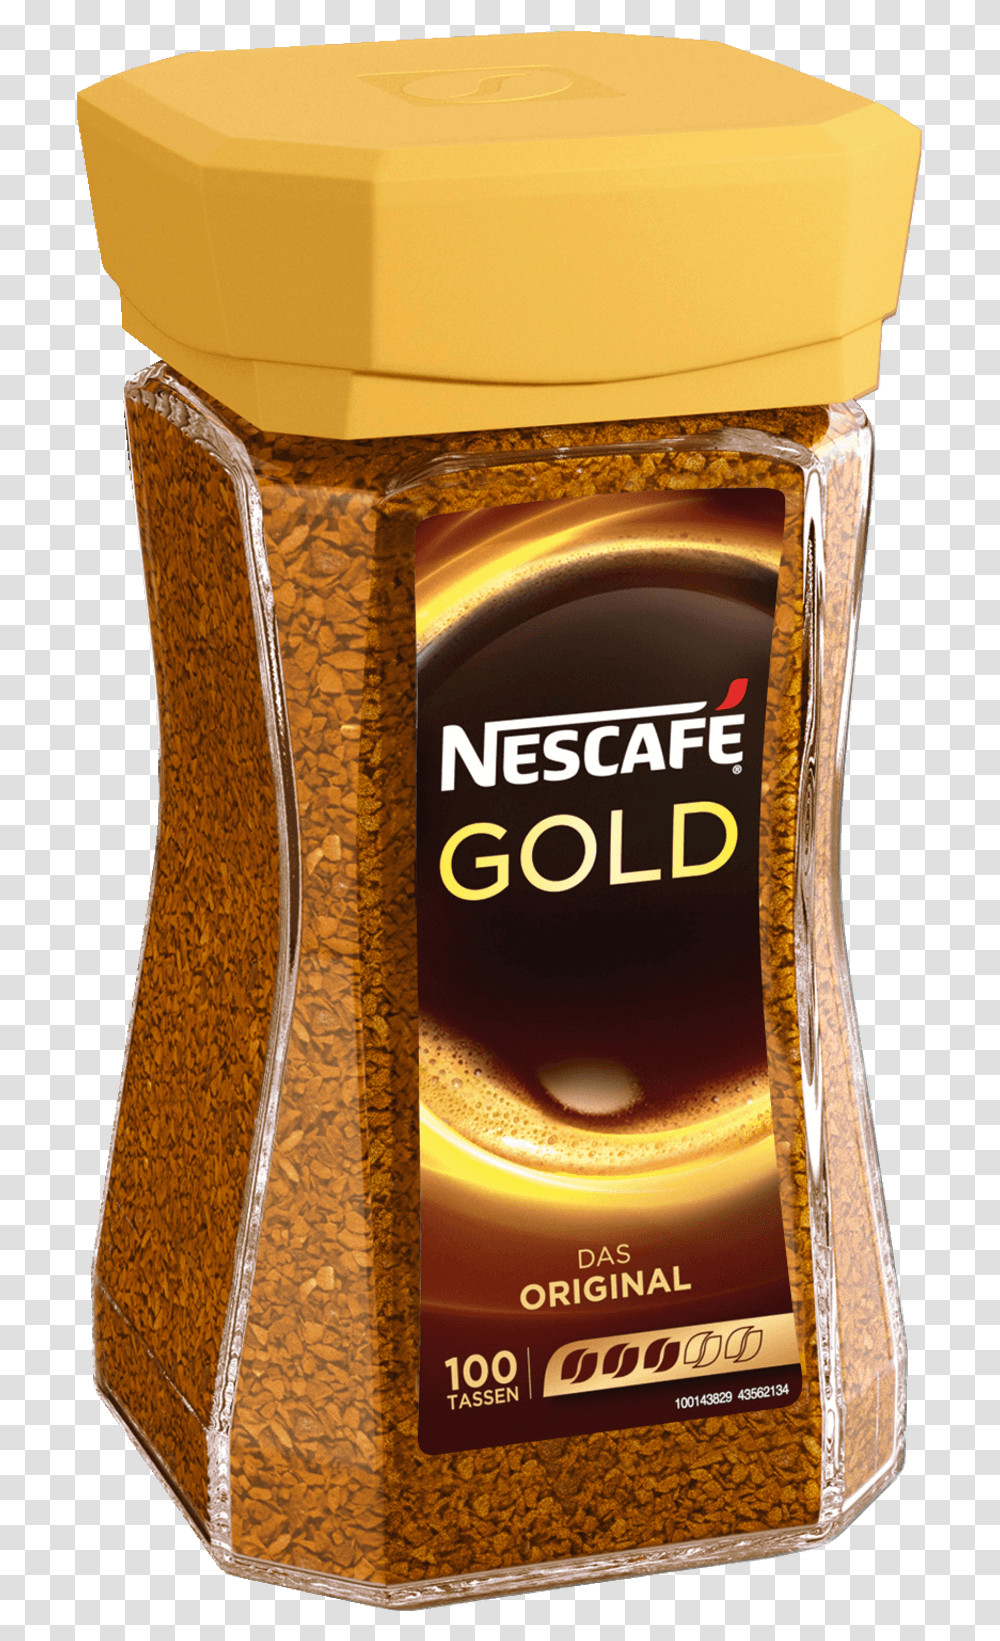 Nescafe Coffee Download Image Nescafe Gold Coffee, Liquor, Alcohol, Beverage, Box Transparent Png